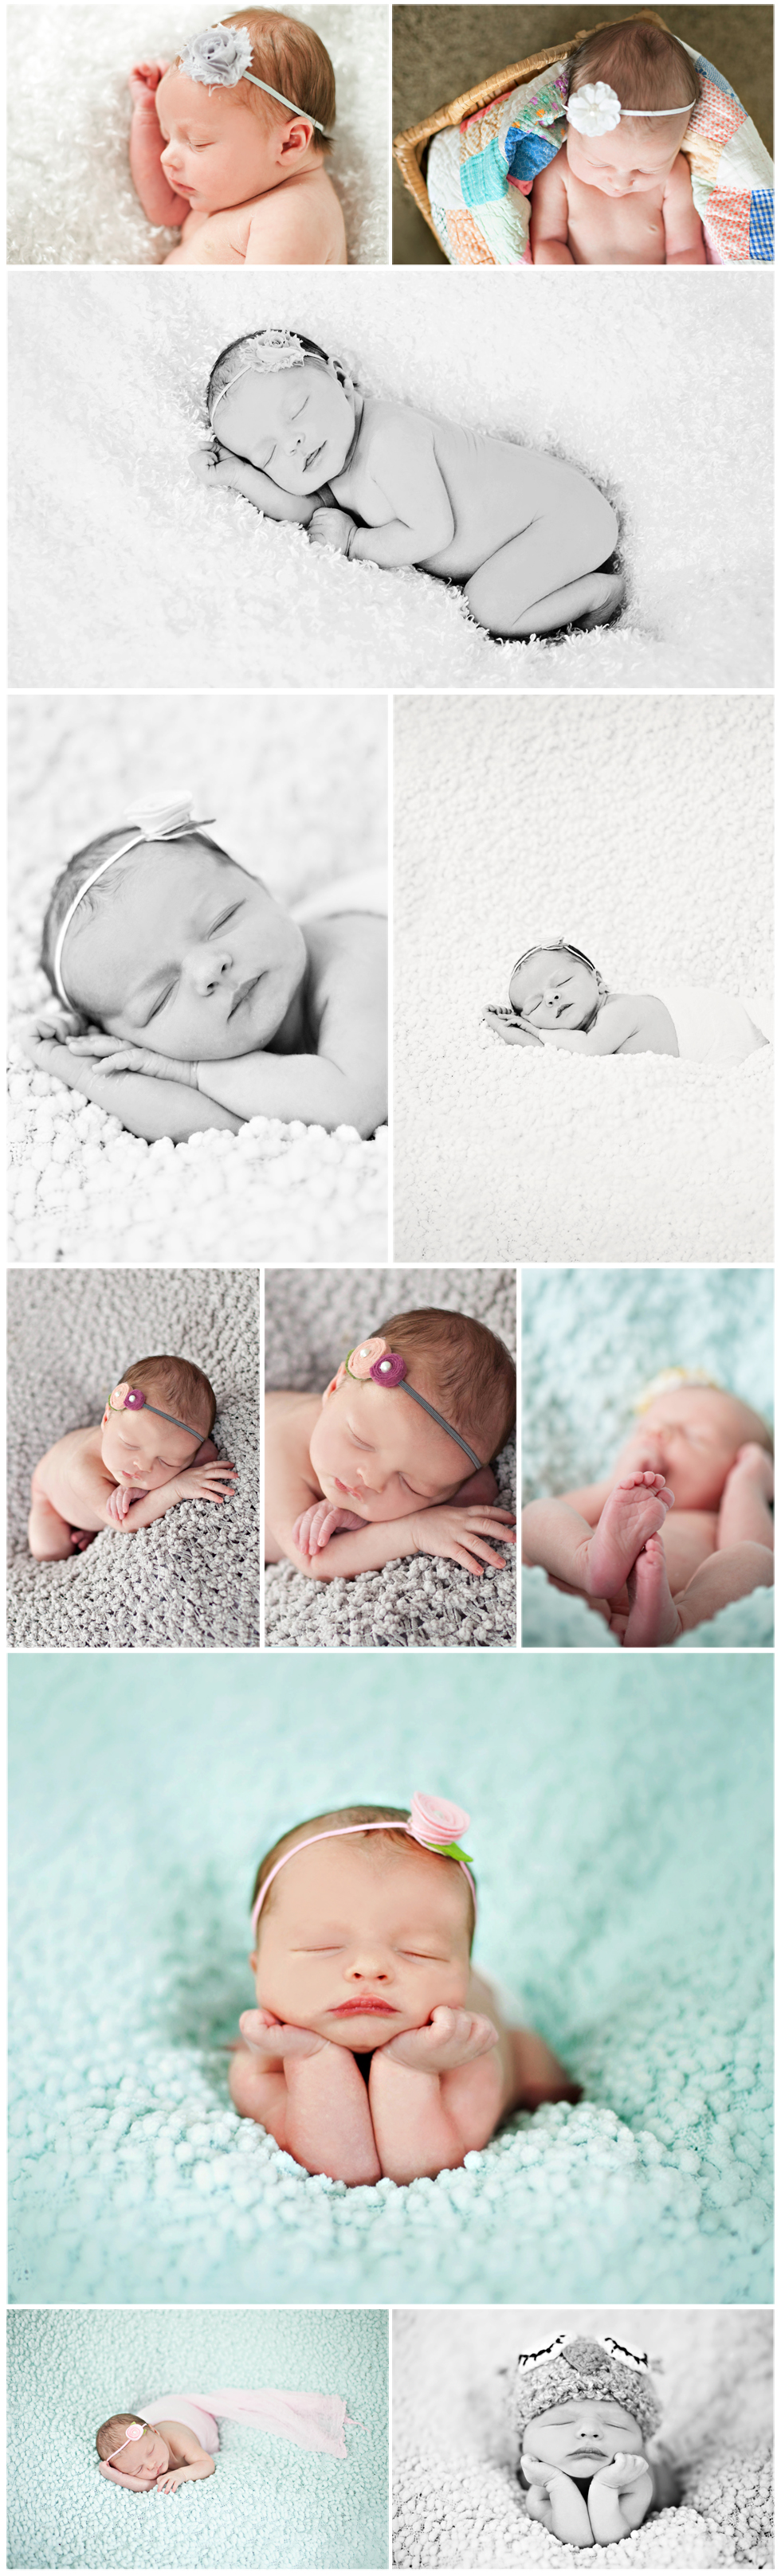 St. Louis Newborn Photography; www.illumenphotography.com